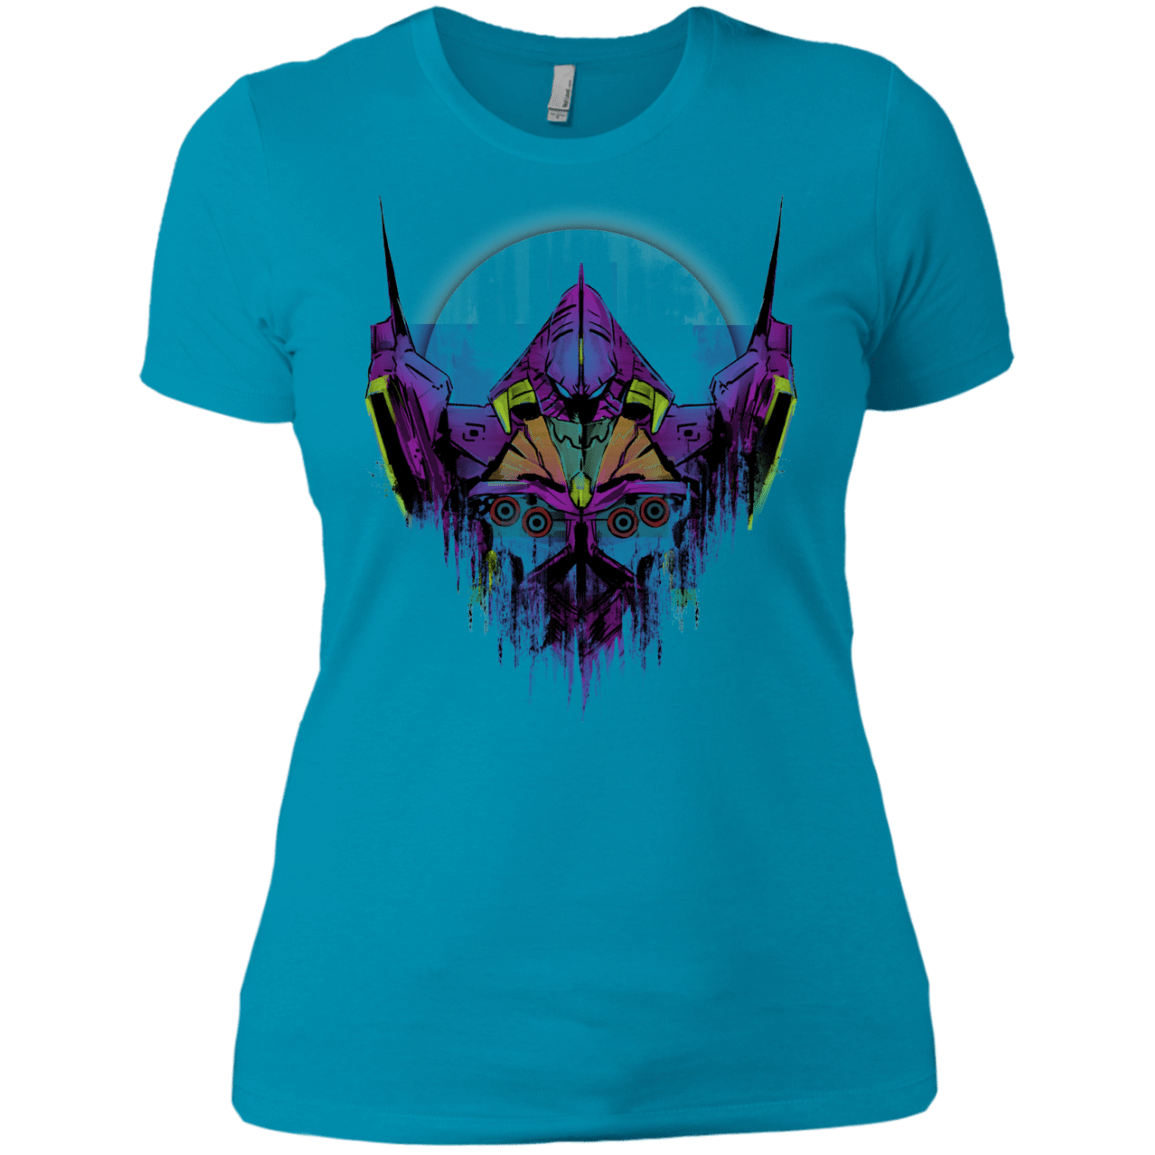 T-Shirts Turquoise / X-Small Test Type Women's Premium T-Shirt